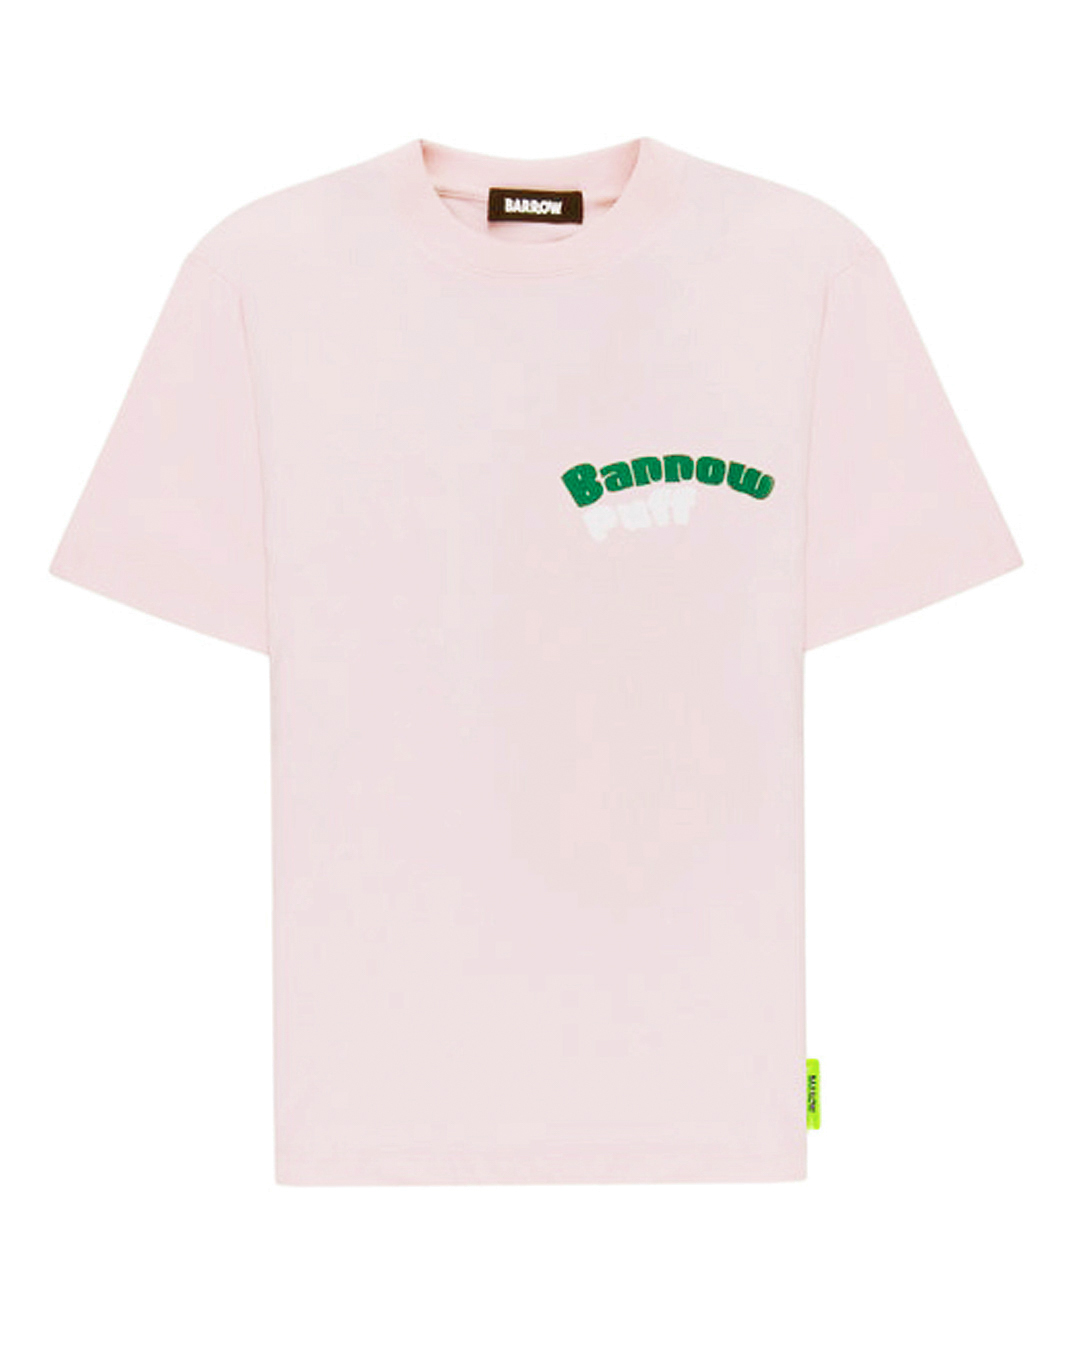 футболка BARROW S4BWMATH125 розовый+принт m, размер m, цвет розовый+принт S4BWMATH125 розовый+принт m - фото 1